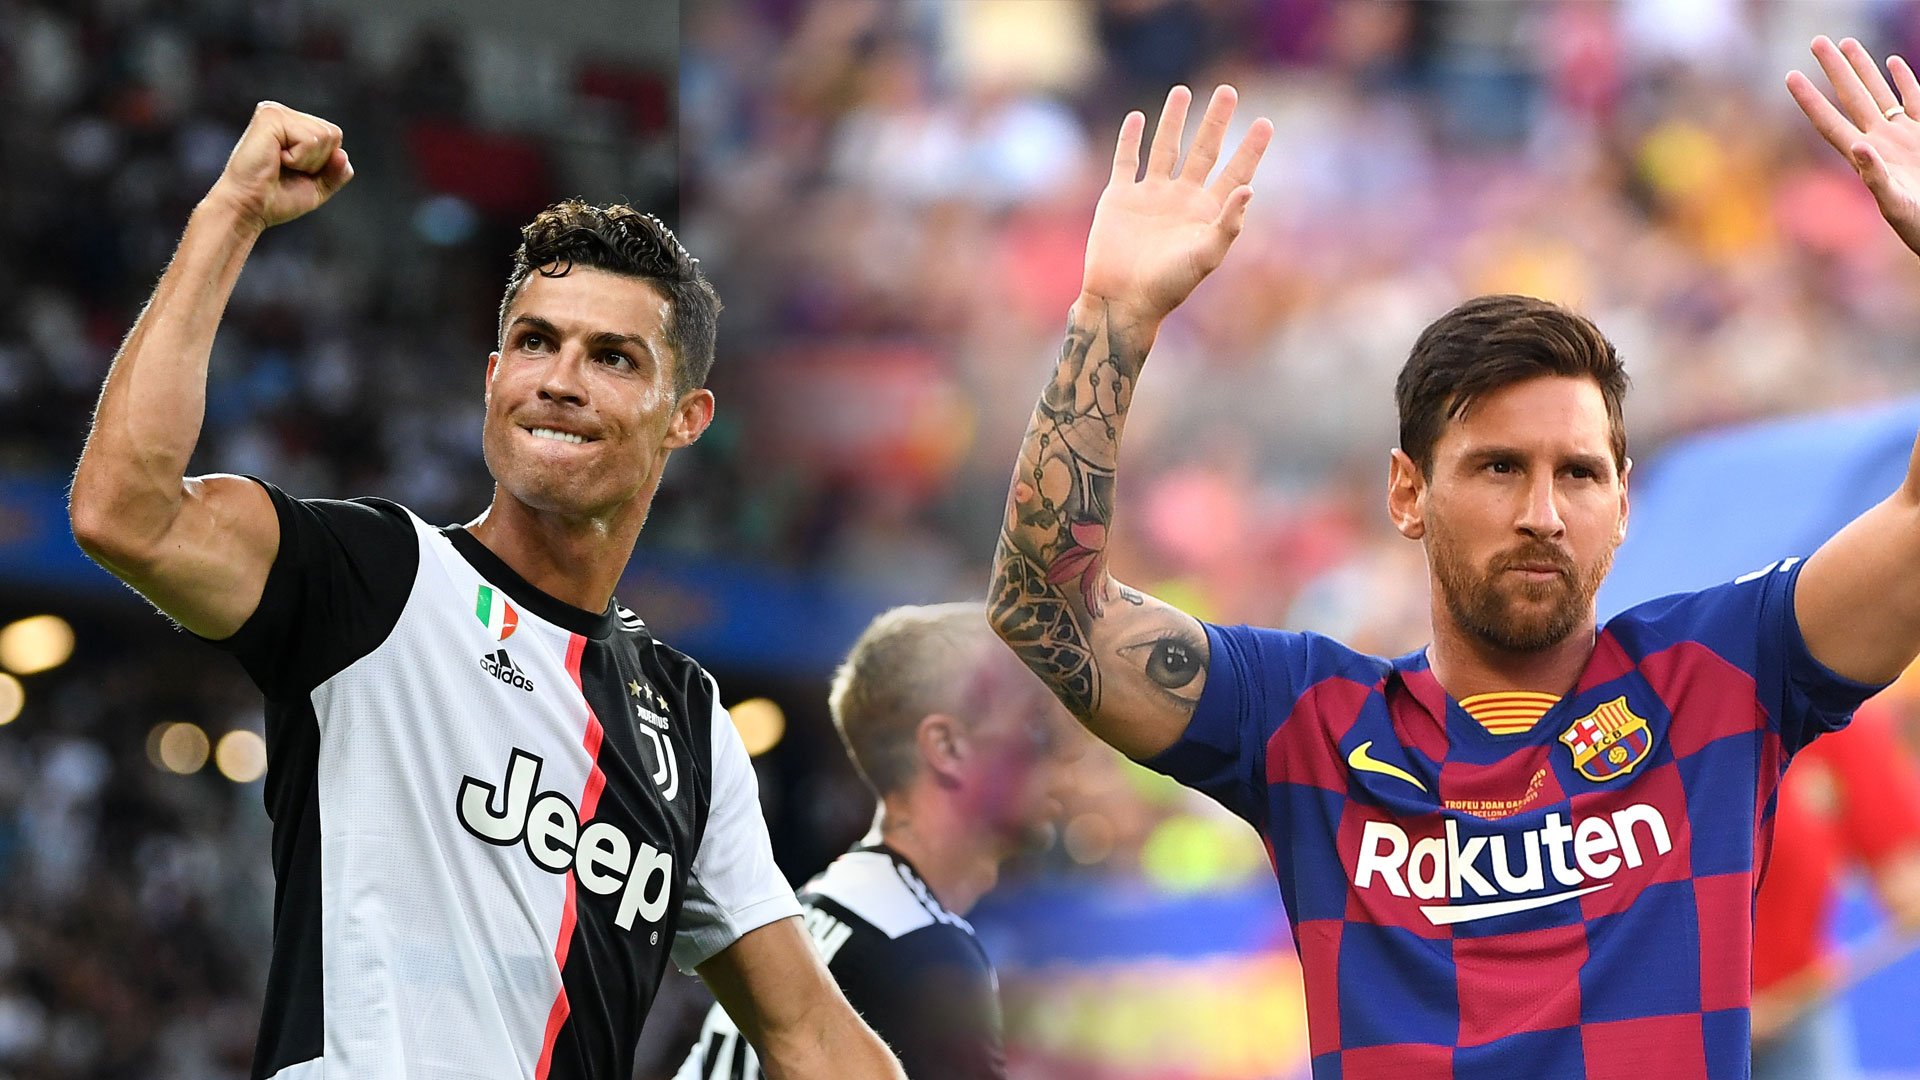 Ini Bek Terberat Yang Dihadapi Critiano Ronaldo dan Lionel Messi : Bukan Godin Atau Ramos